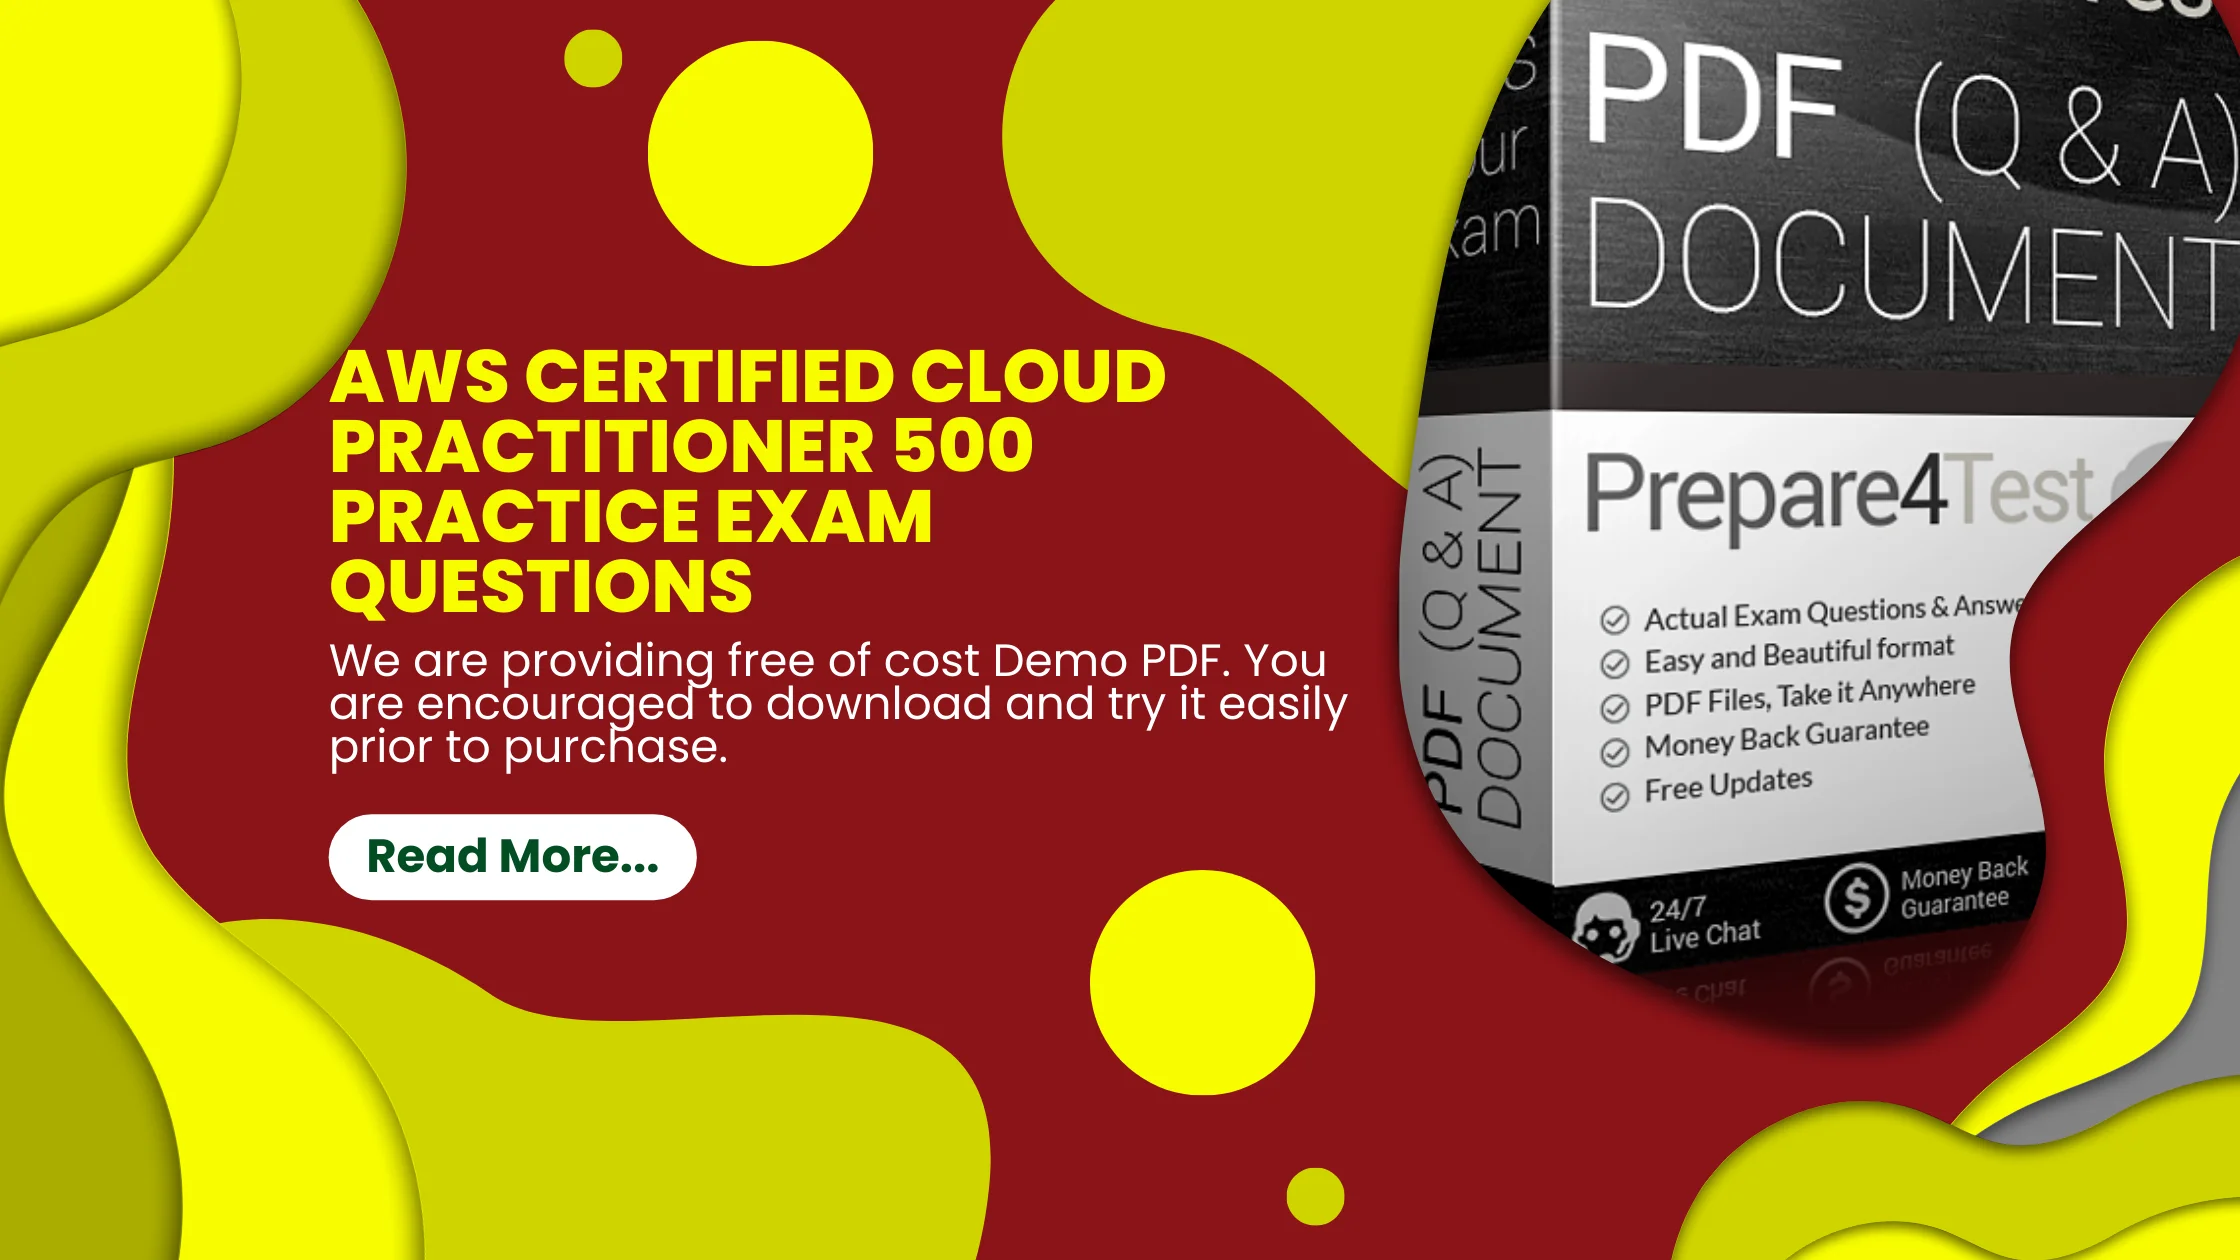 AWS Certified Cloud Practitioner 500 Practice Exam Questions guarantee